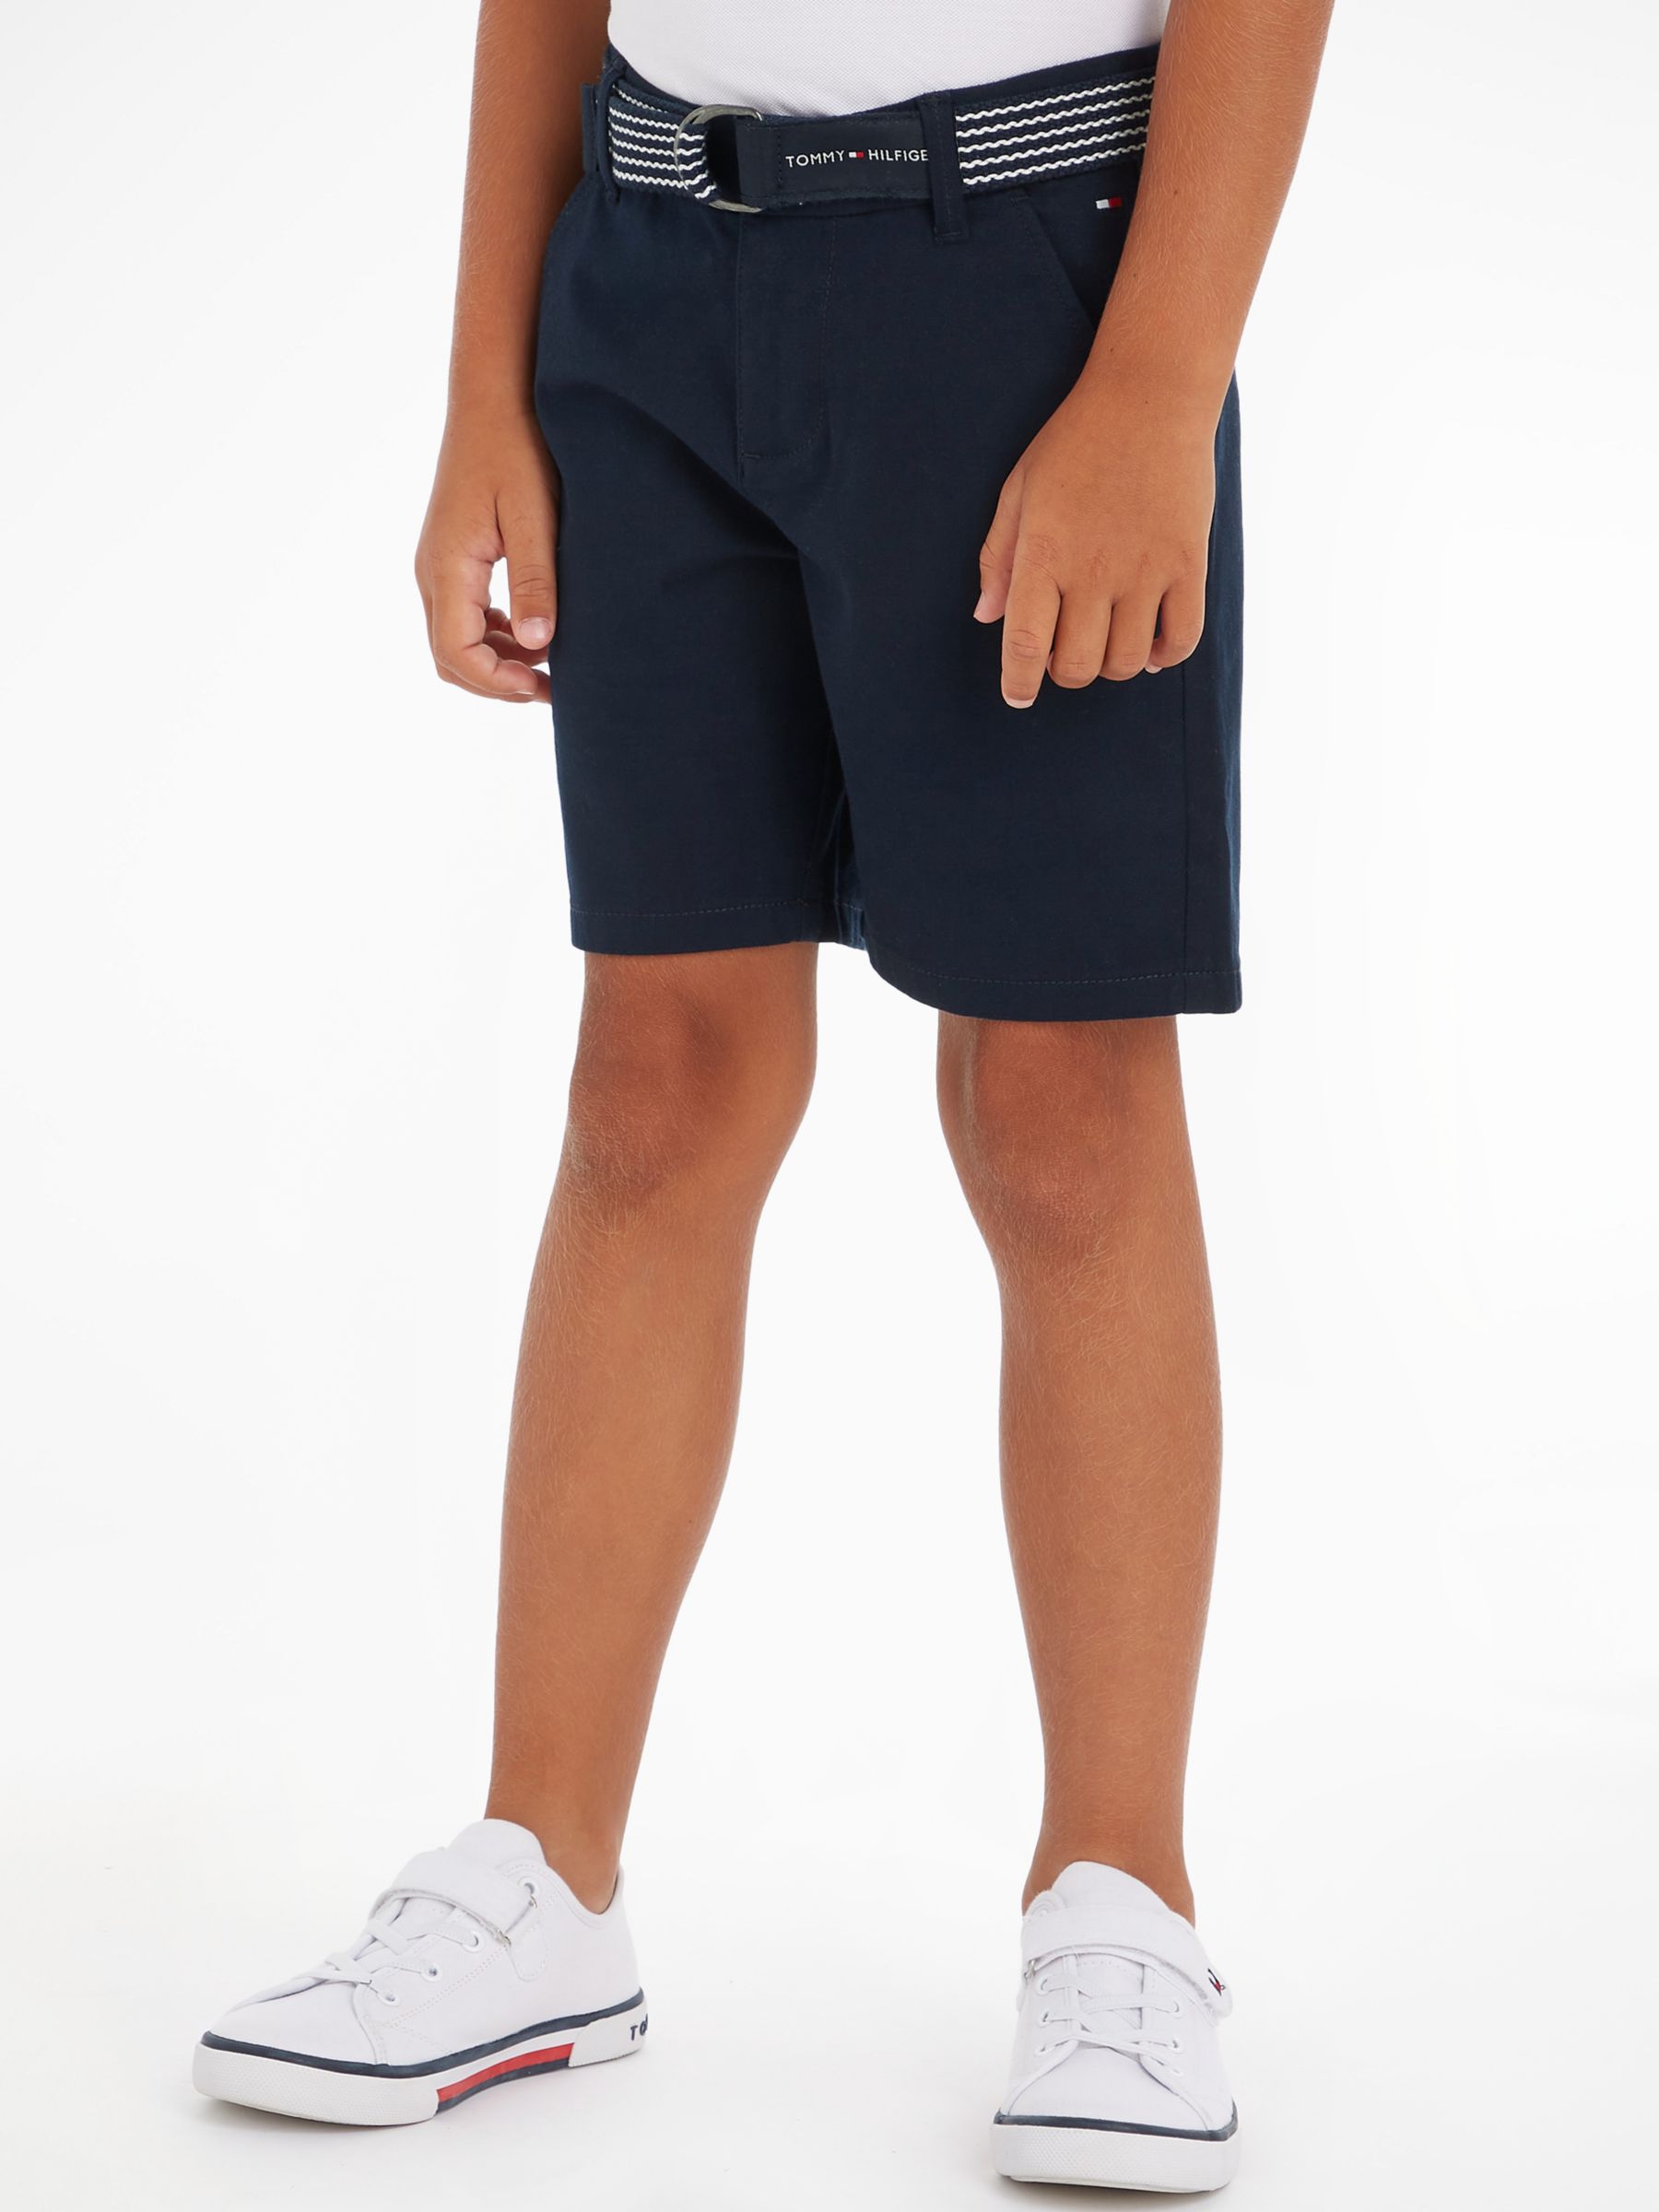 Tommy Hilfiger Kids' Belt Chino Shorts, Desert Sky, 3 years